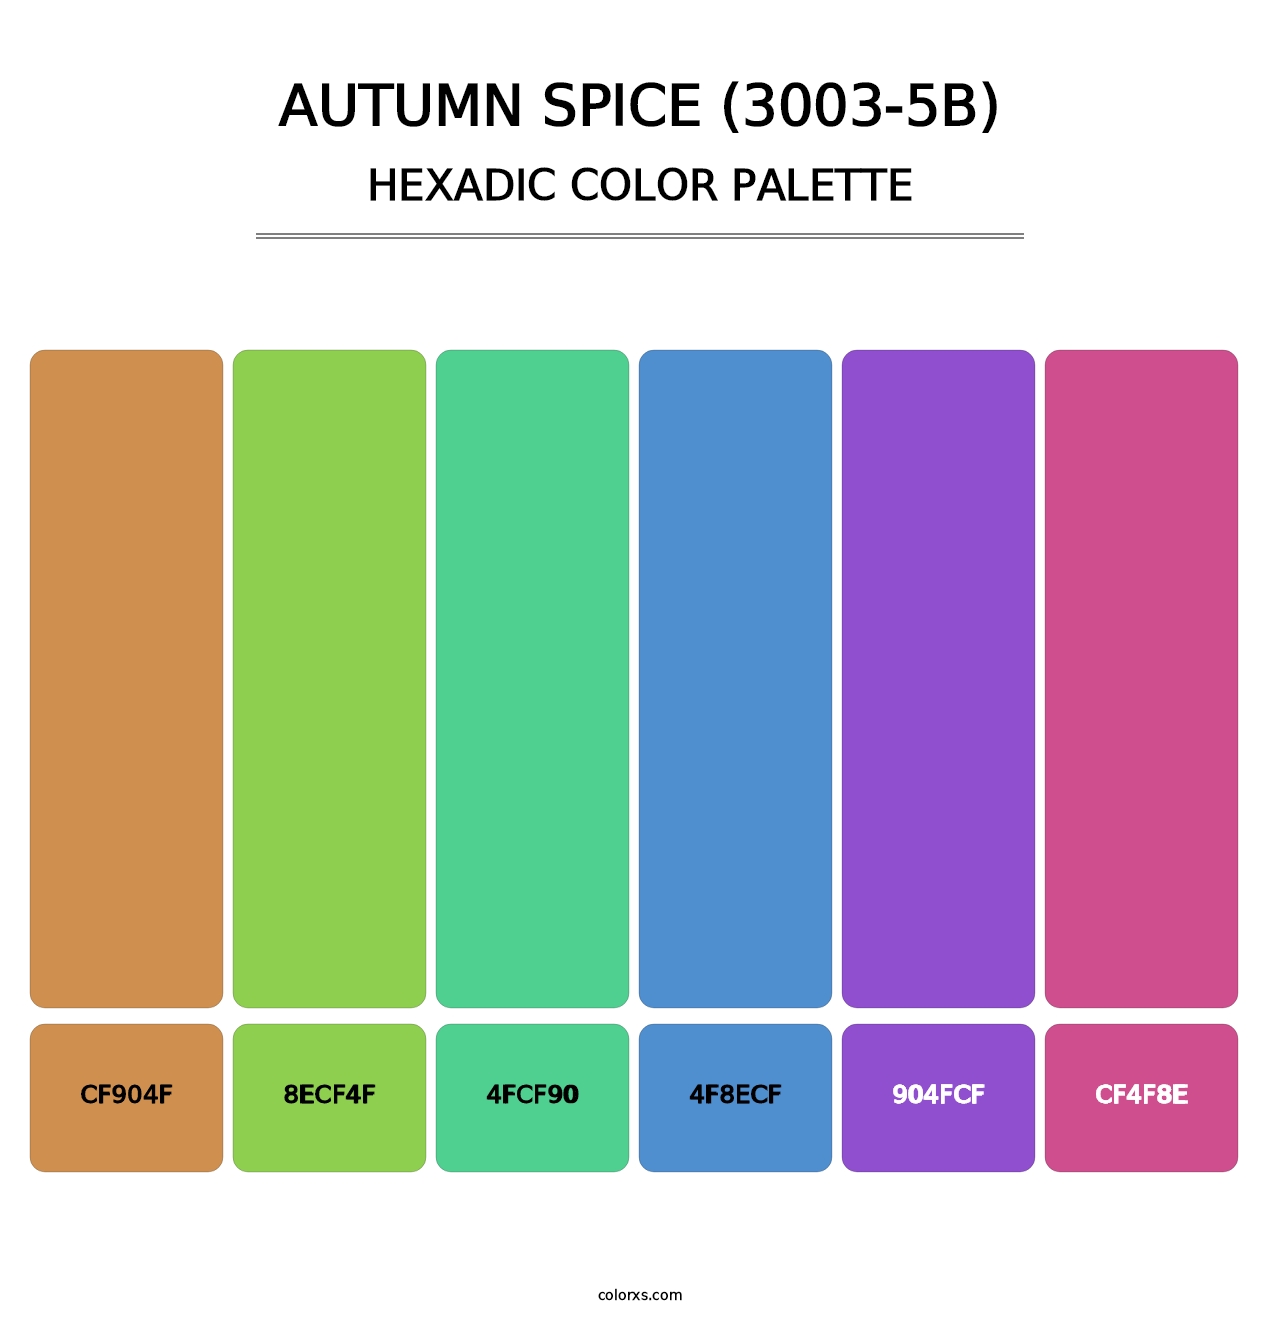 Autumn Spice (3003-5B) - Hexadic Color Palette